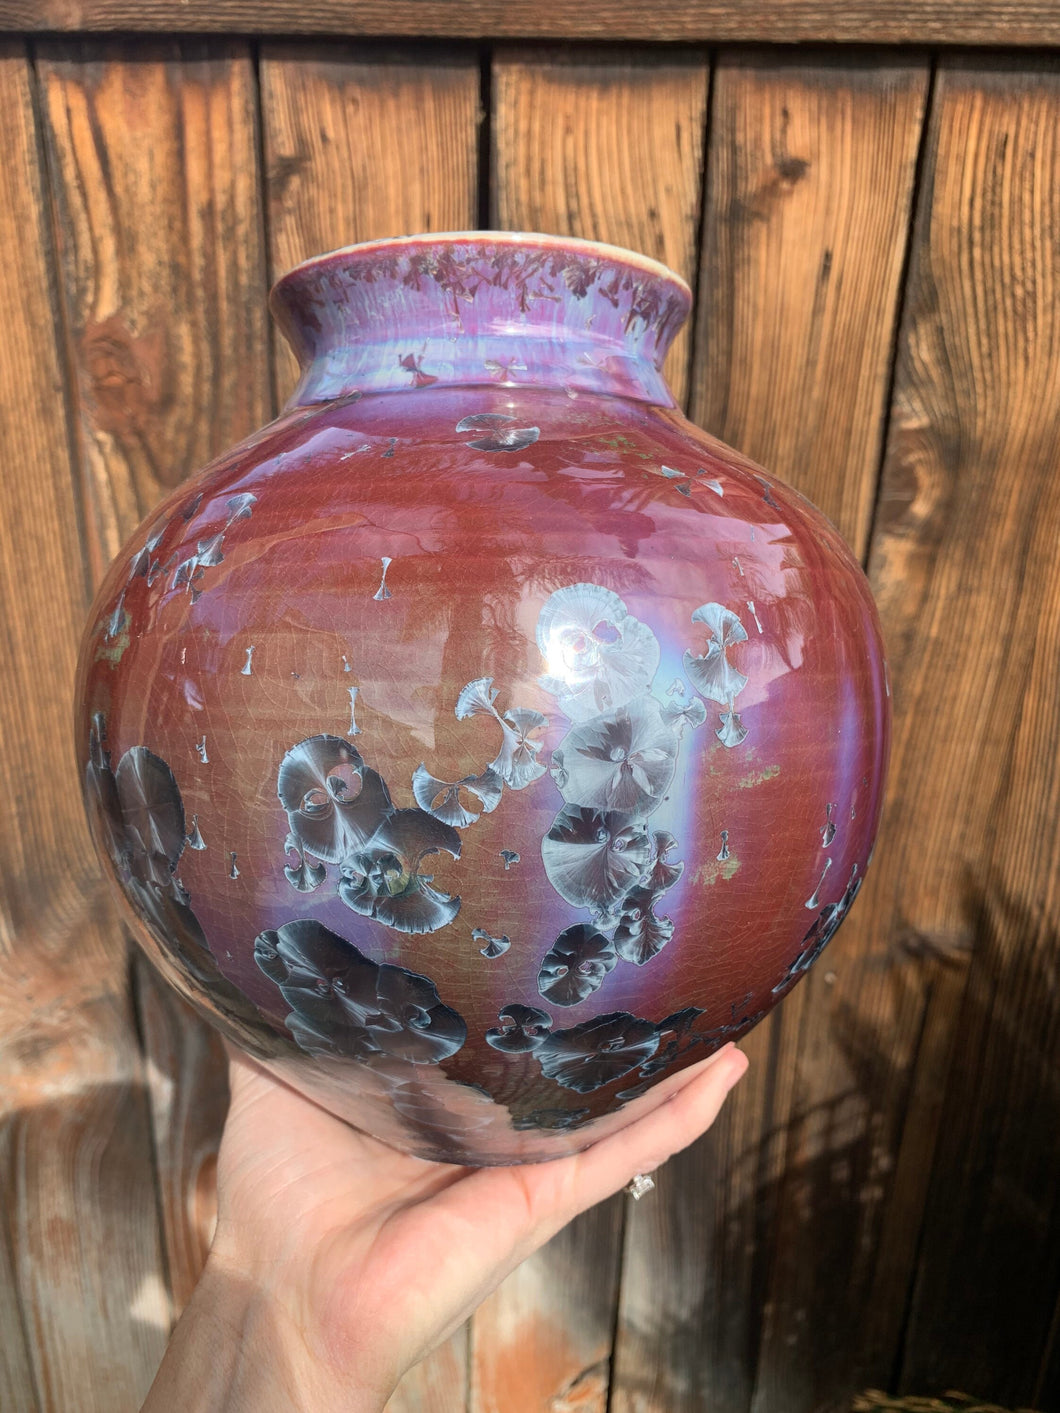 Handmade Pottery Vase Ceramic Crystalline Glazed Decor